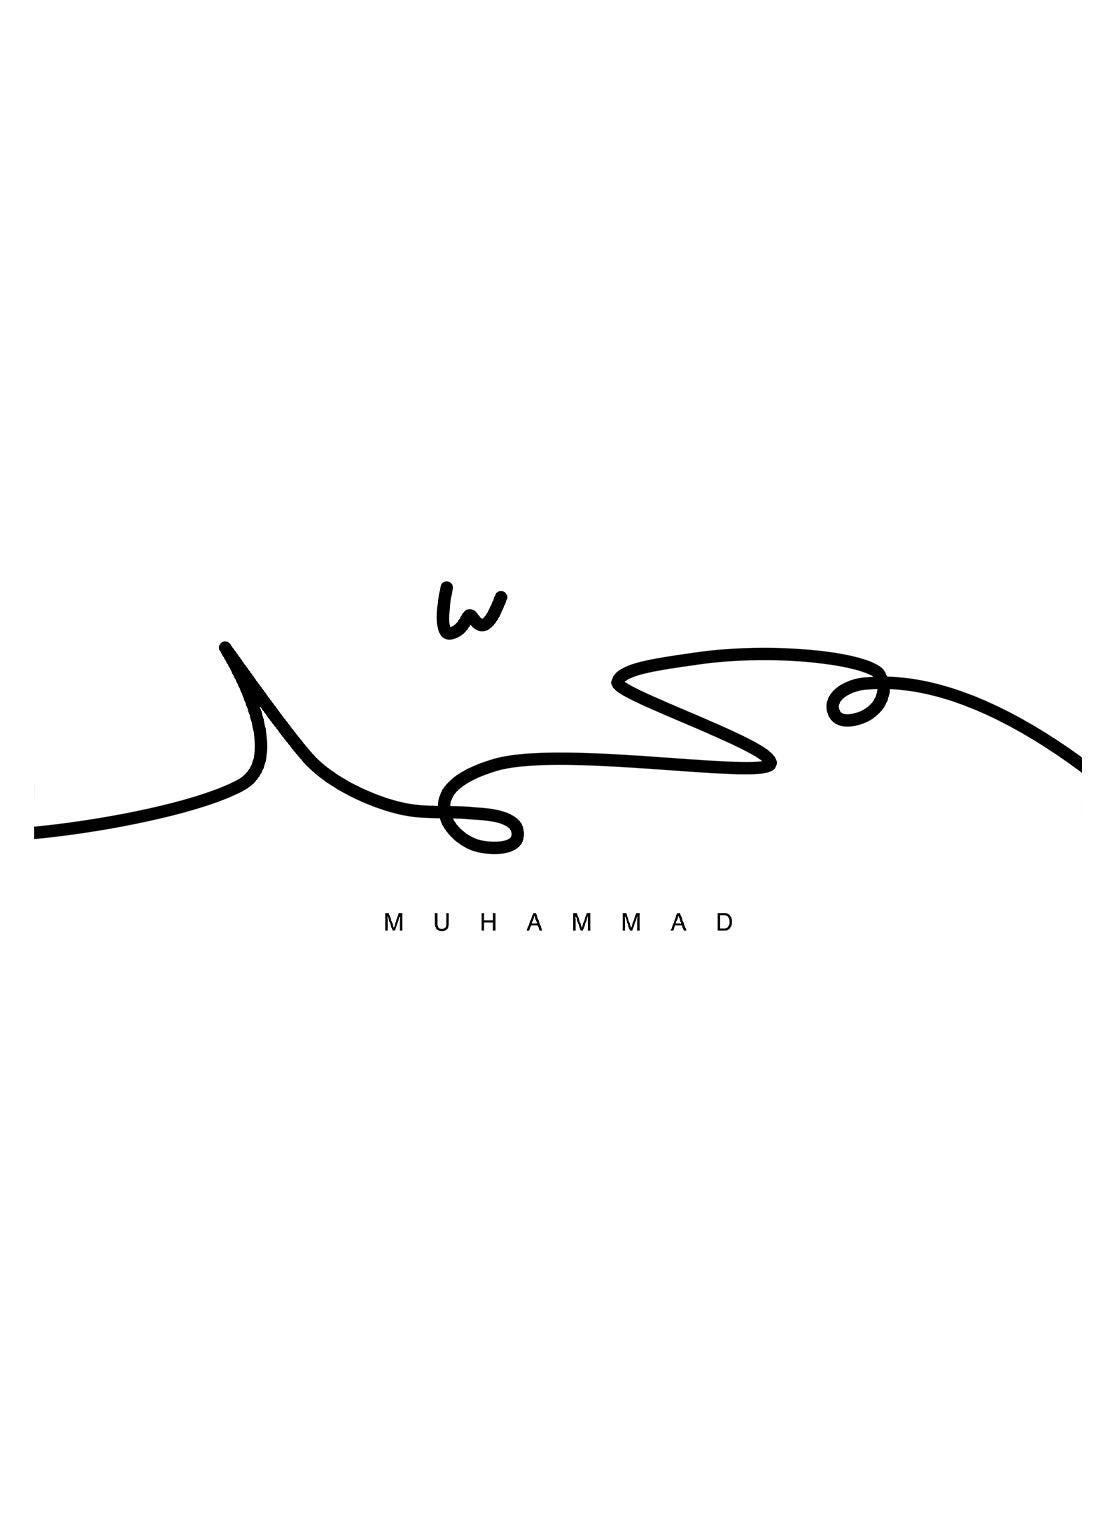 Allah Muhammad Set - Avemfactory